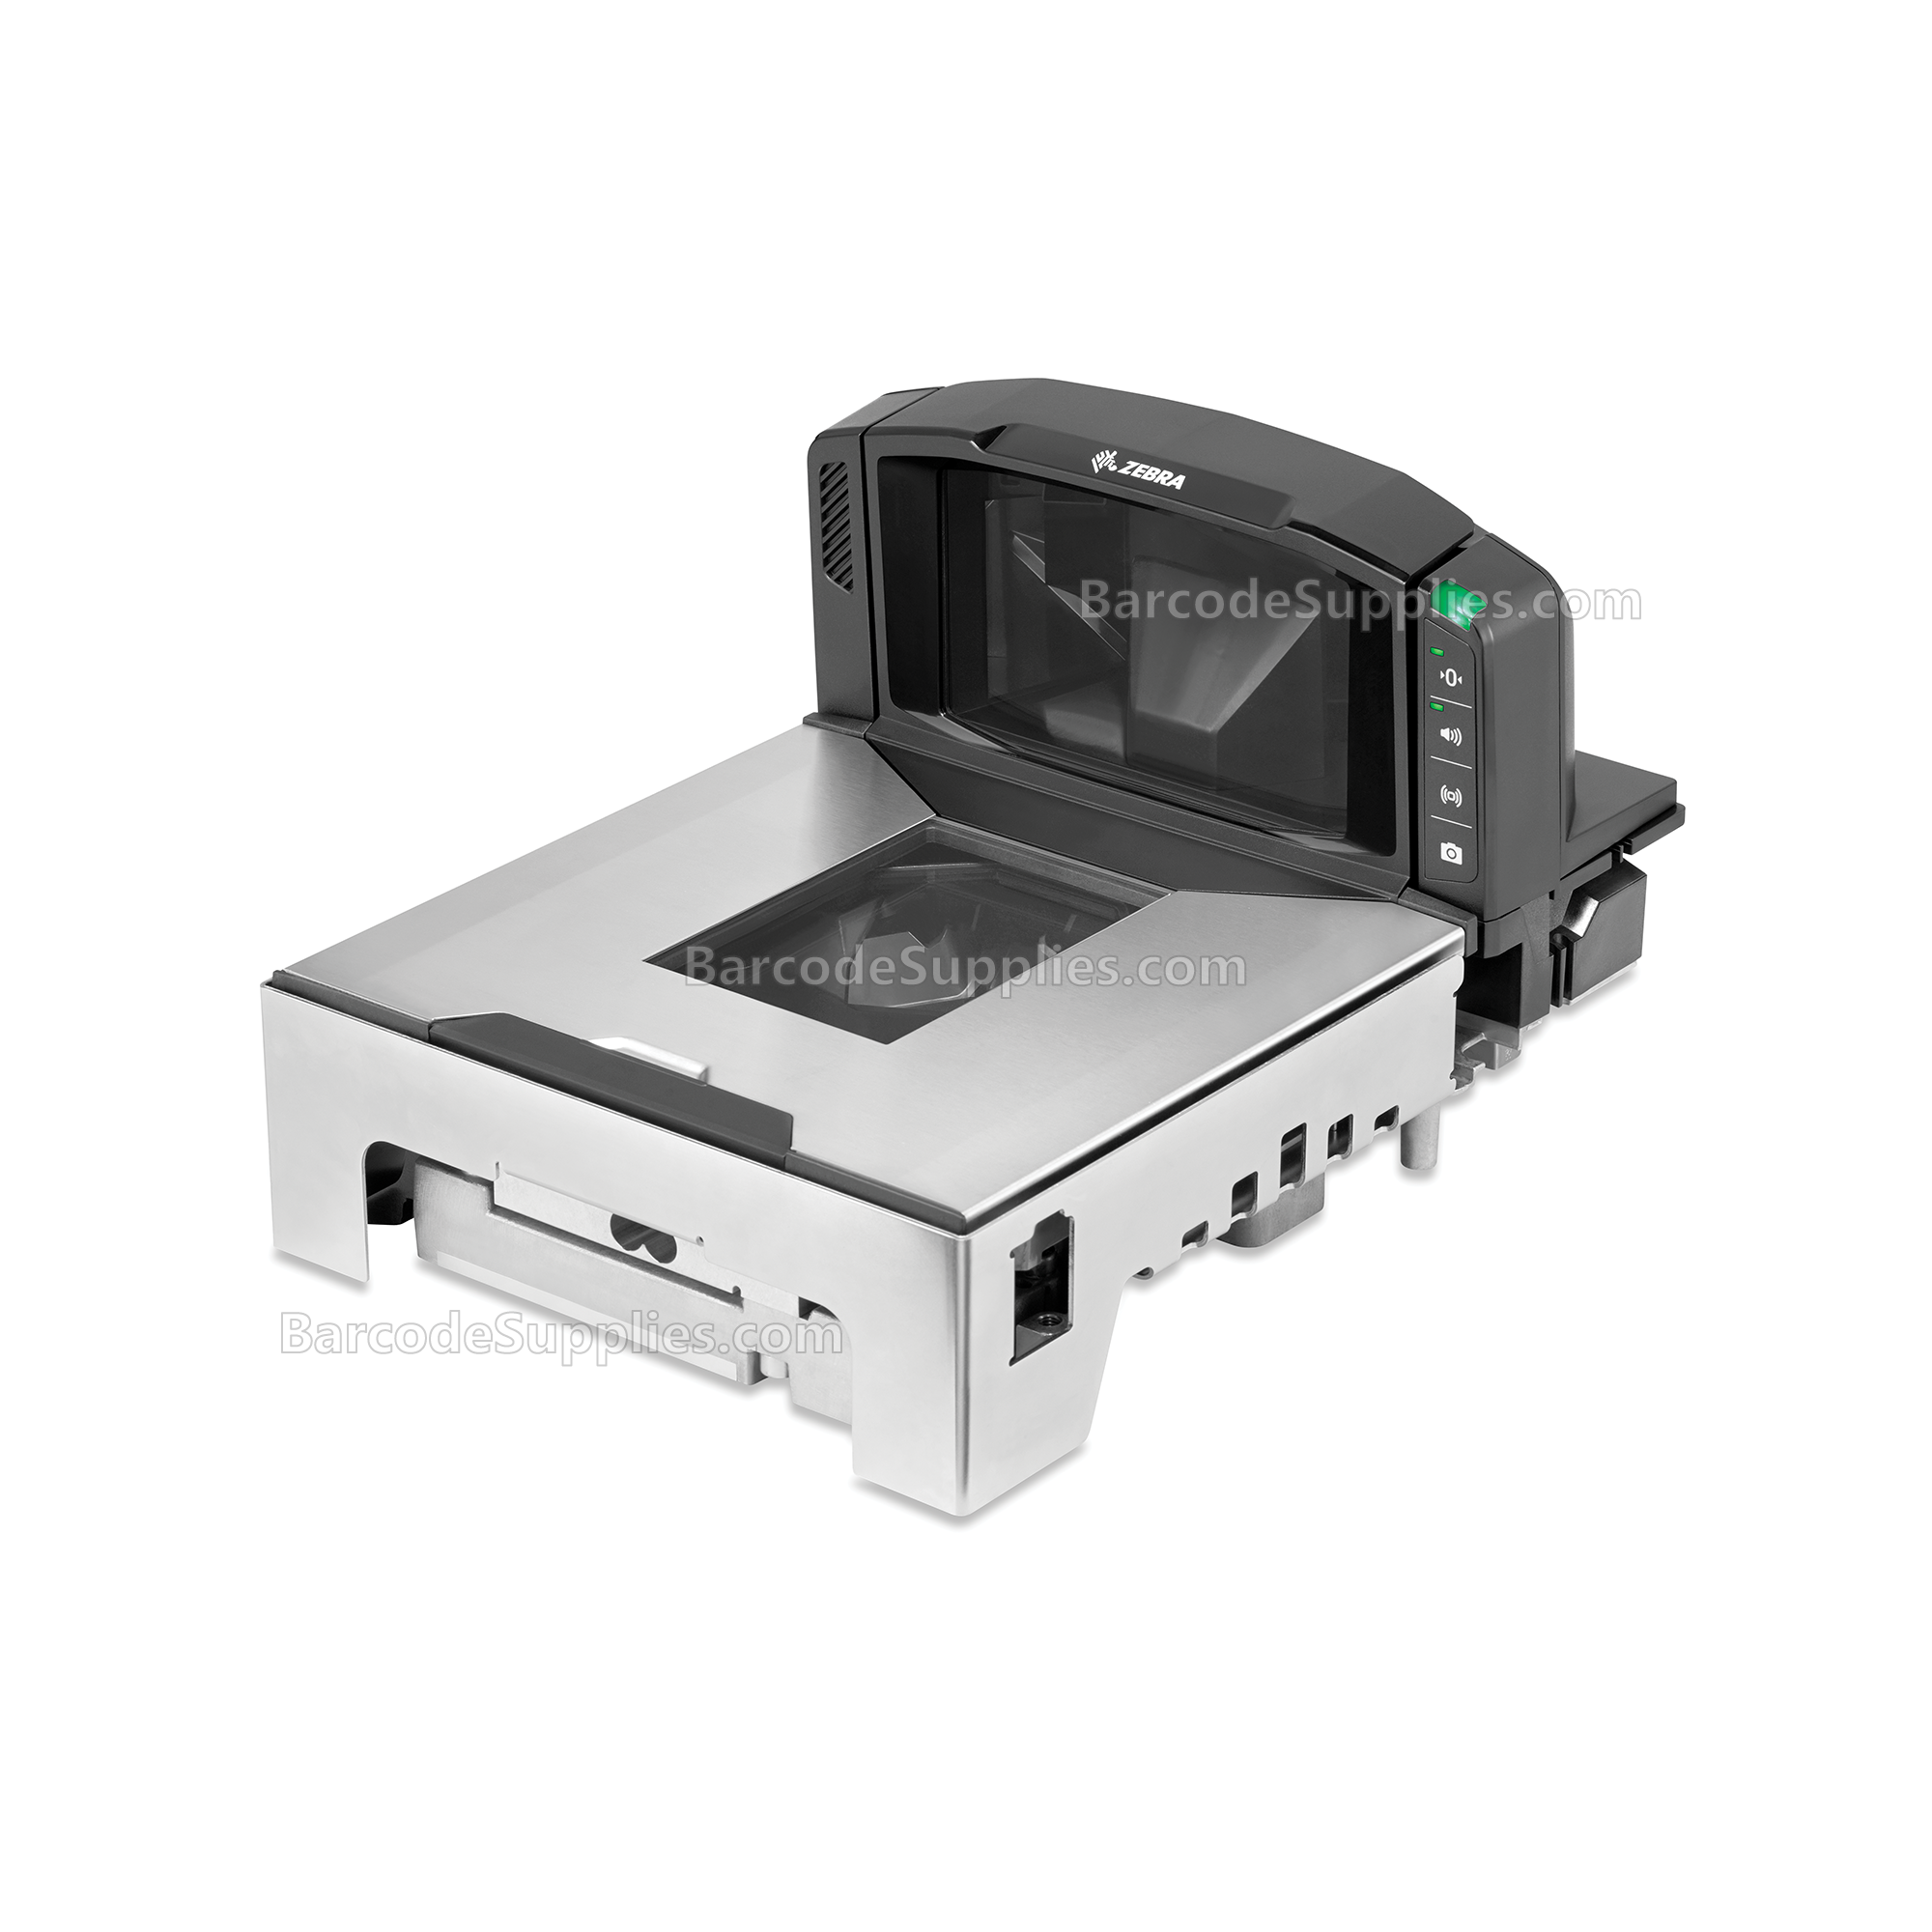 Zebra MP7001: Multiplane scanner, medium, single interval scale, drivers license parsing, sapphire glass, color camera module landscape, United States